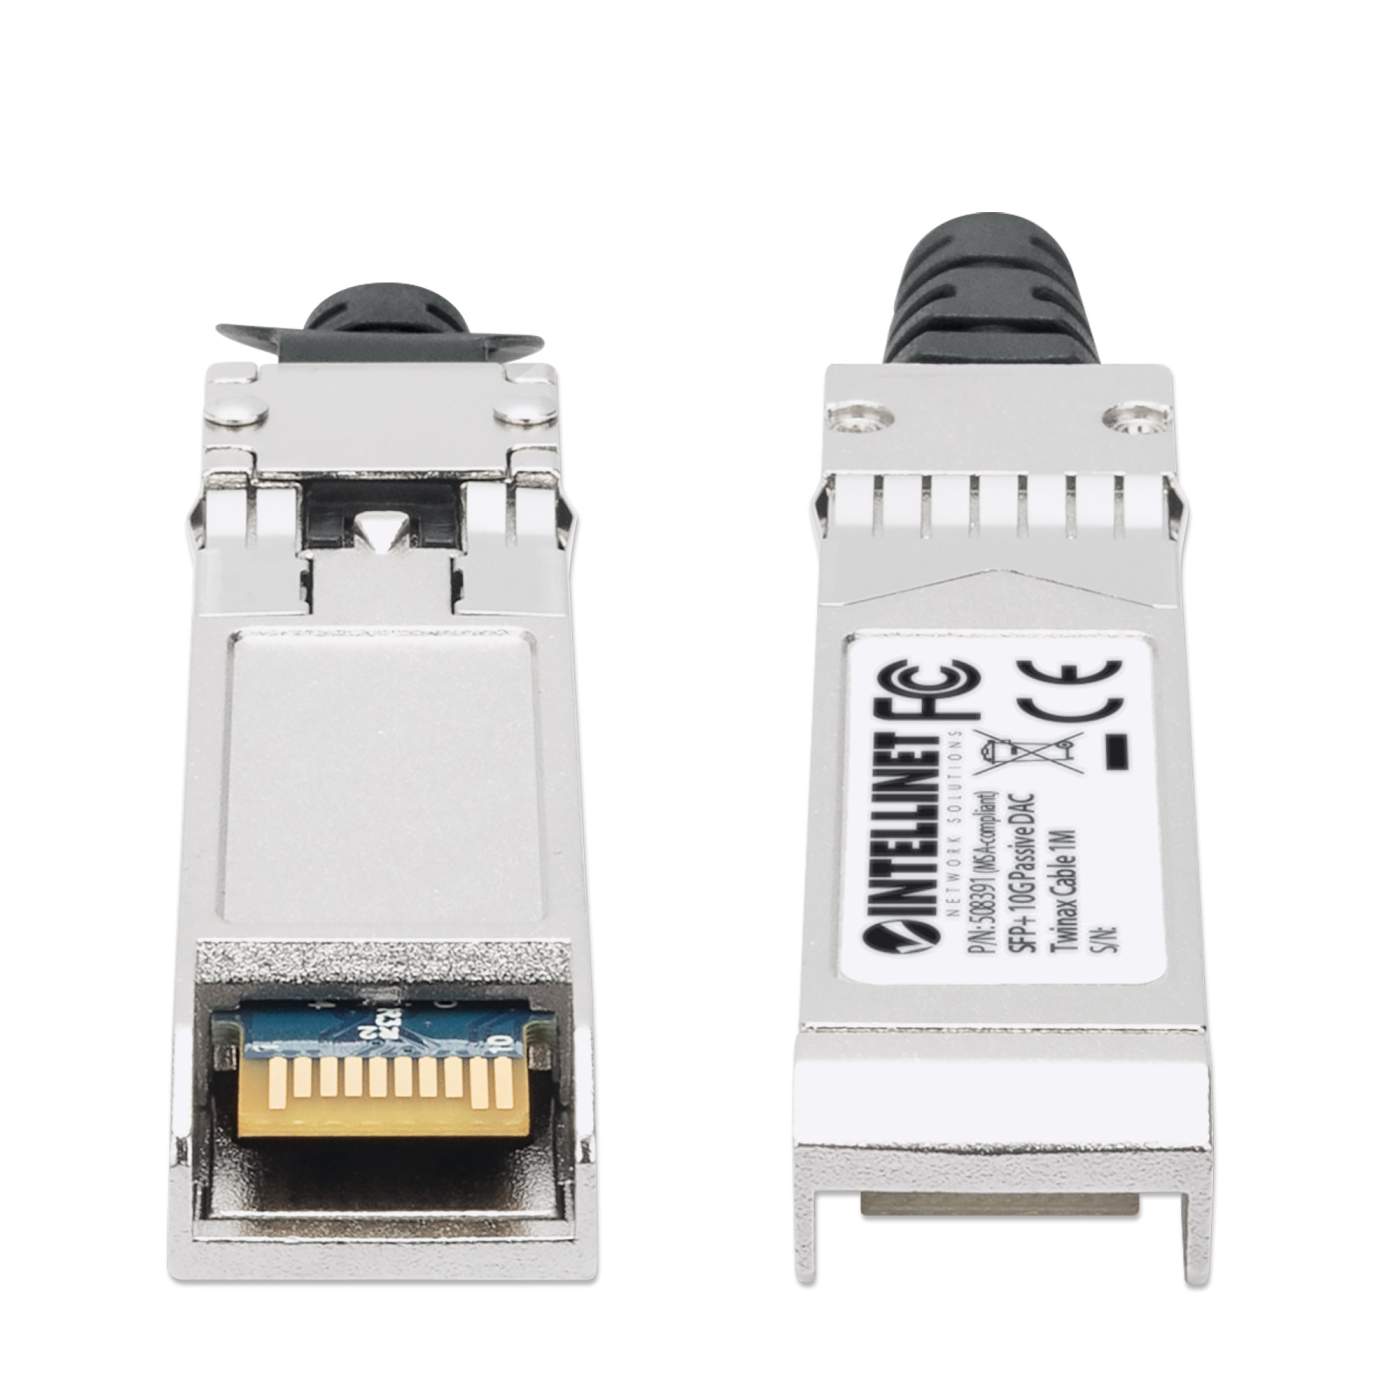 SFP+ 10G Passive DAC Twinax Cable Image 4